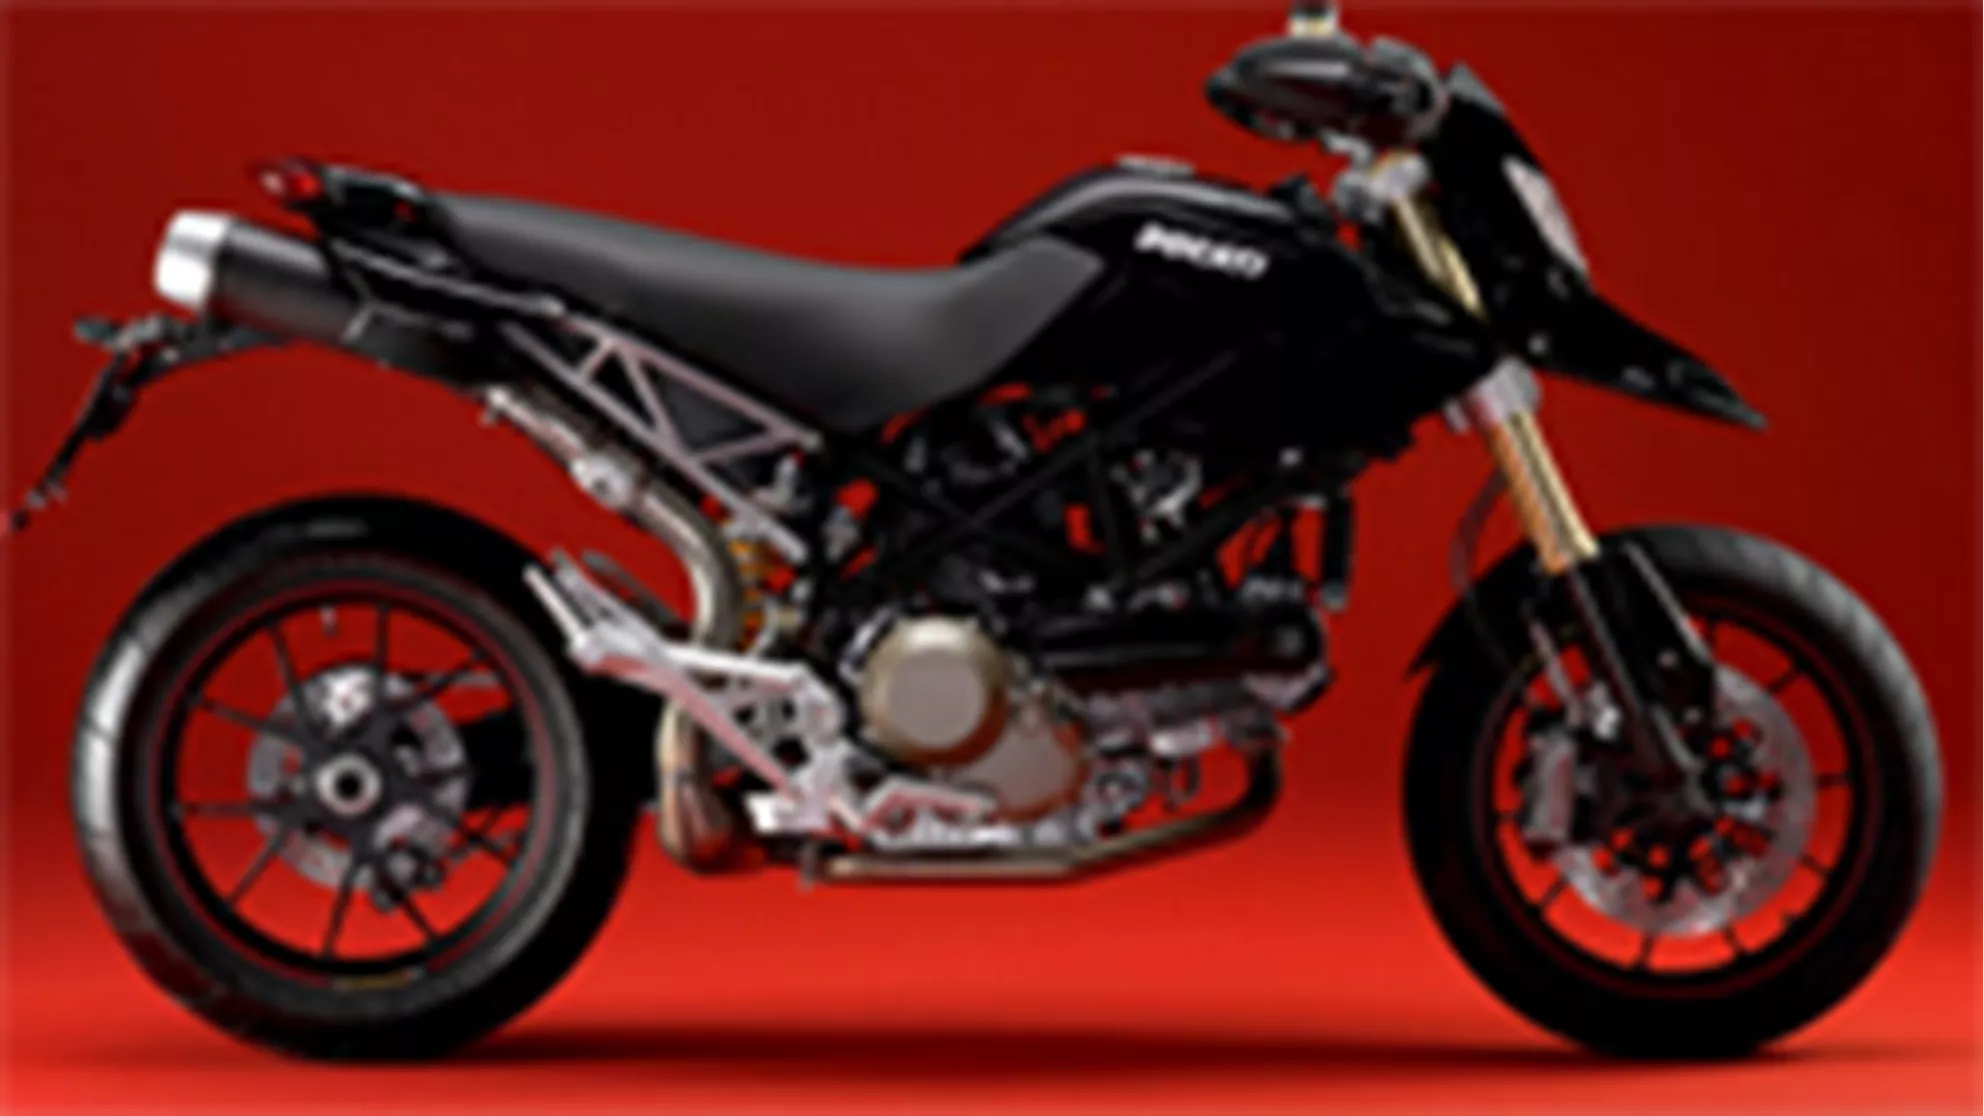 Ducati Hypermotard 1100 S - Image 1